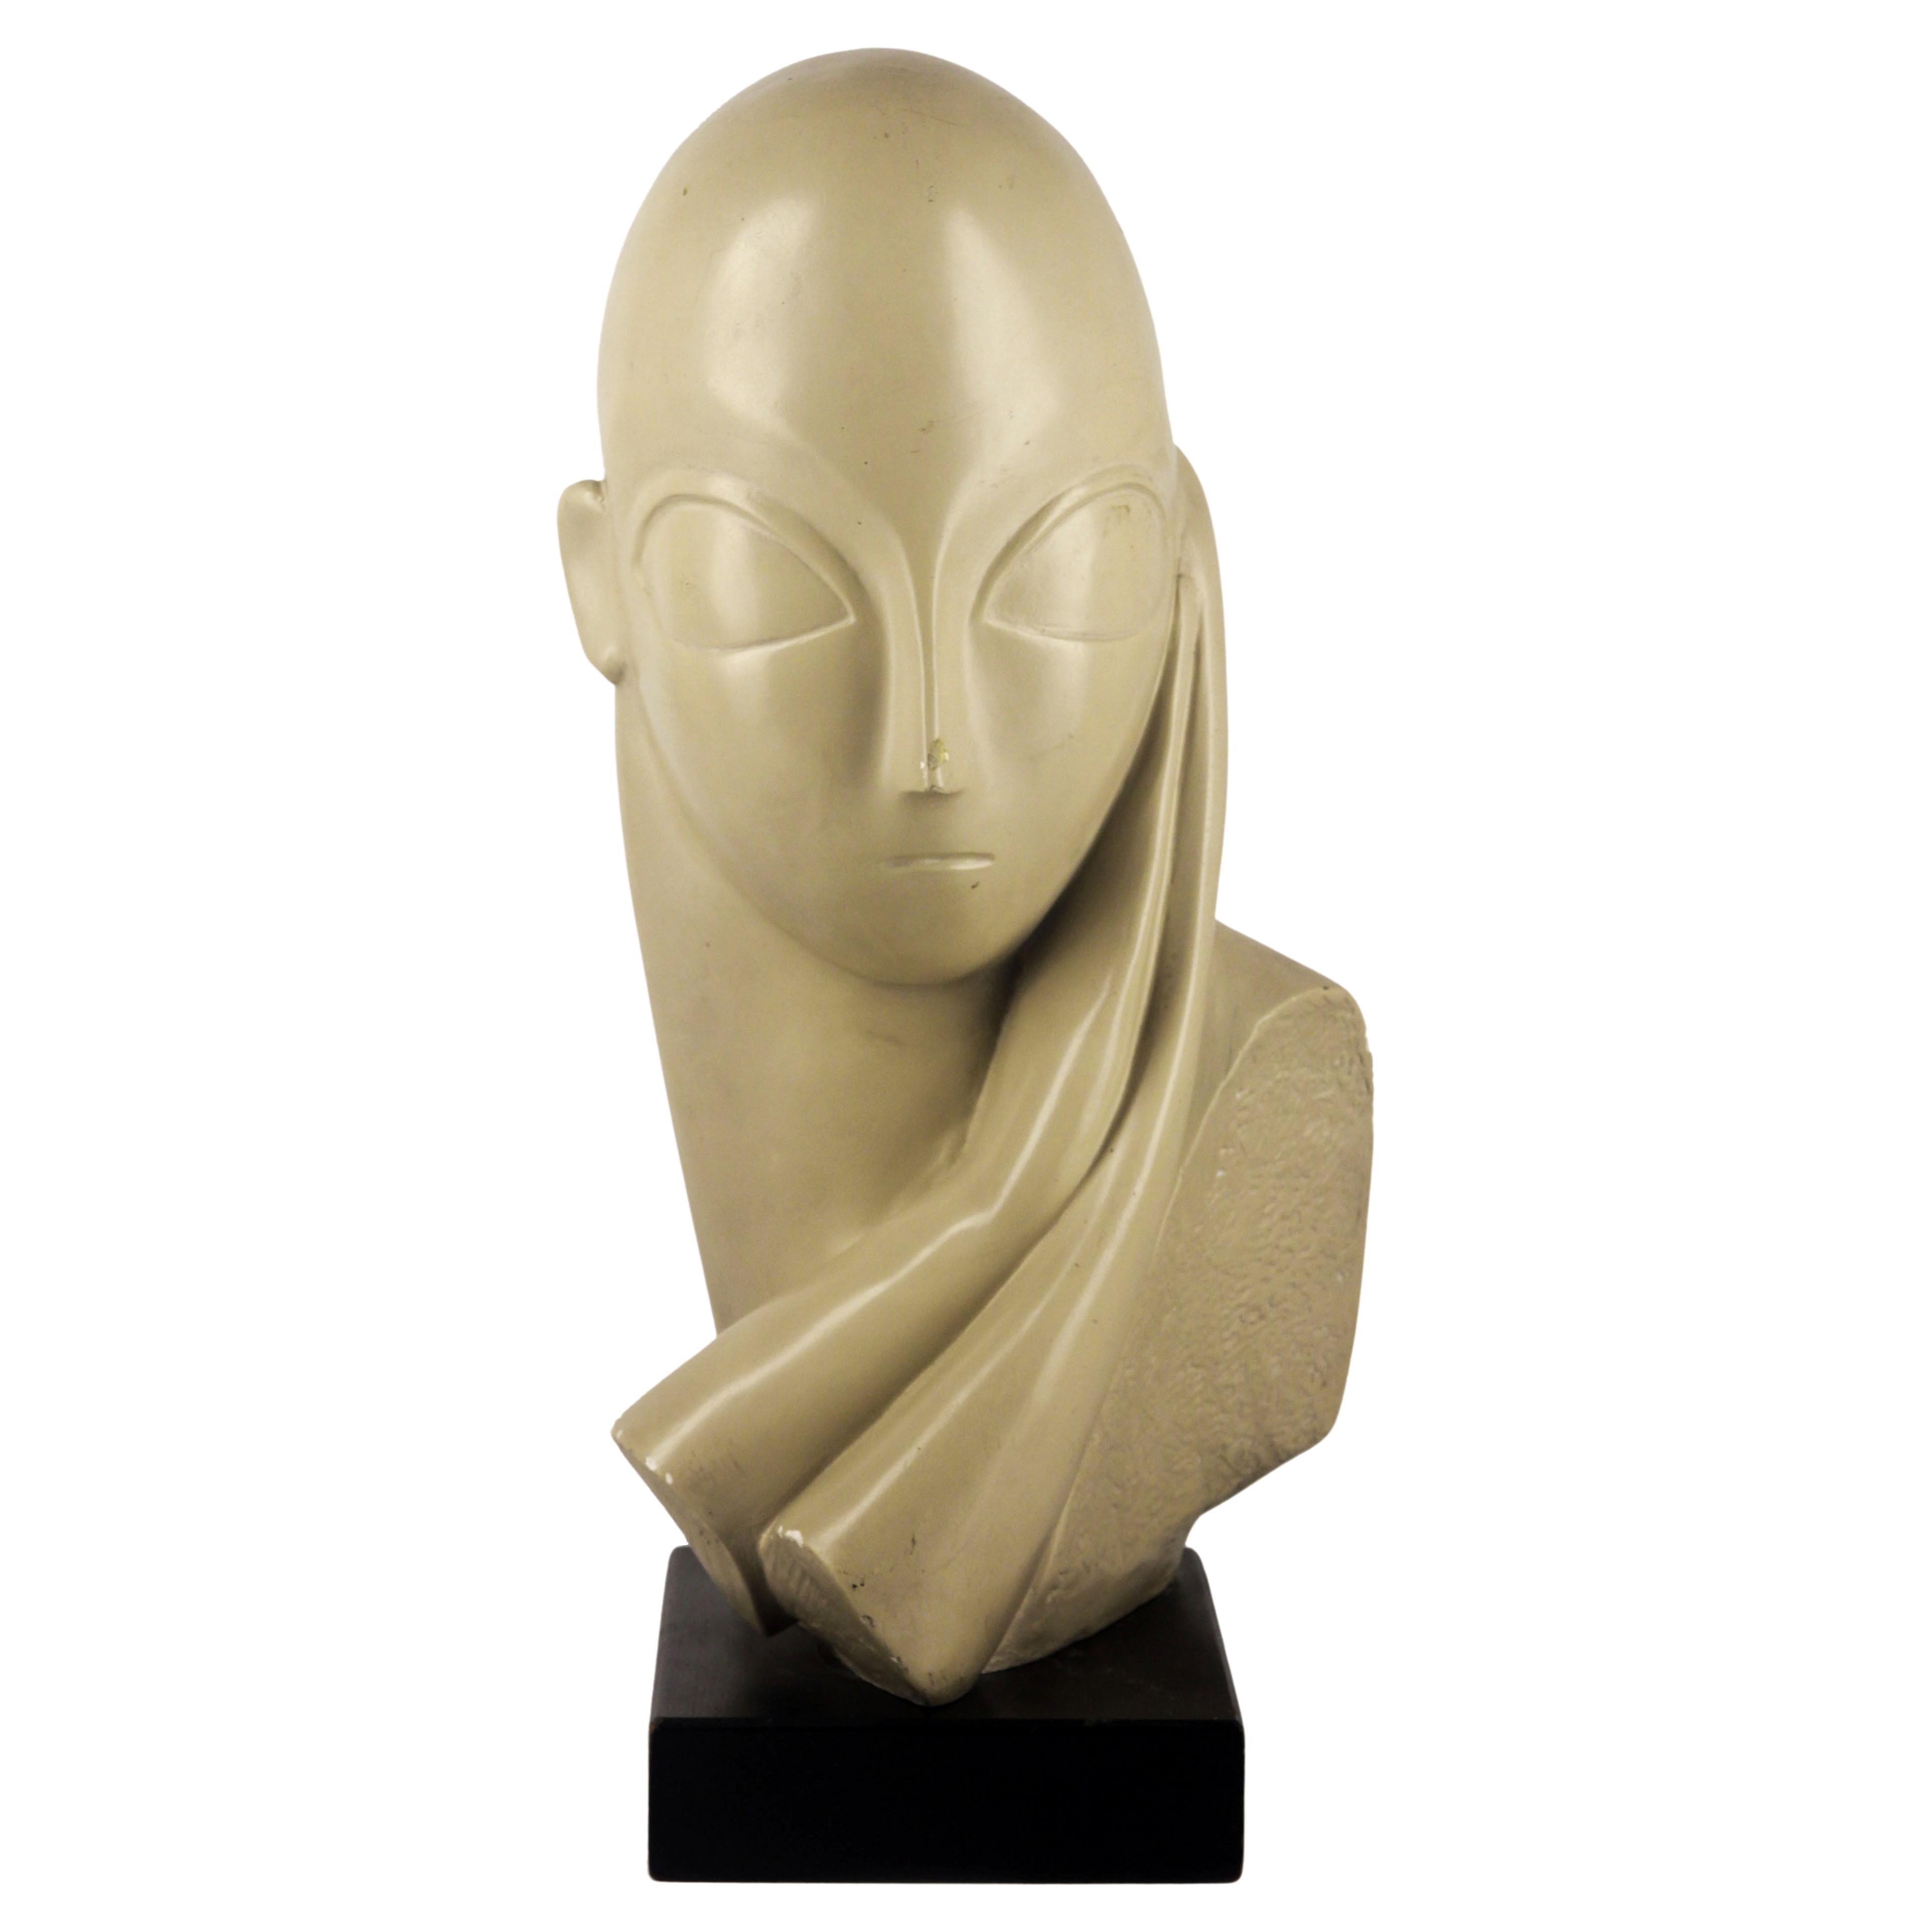 Austin Prod's Plaster Sculpture/Bust Based on 'Mademoiselle Pogany' by Brâncuşi